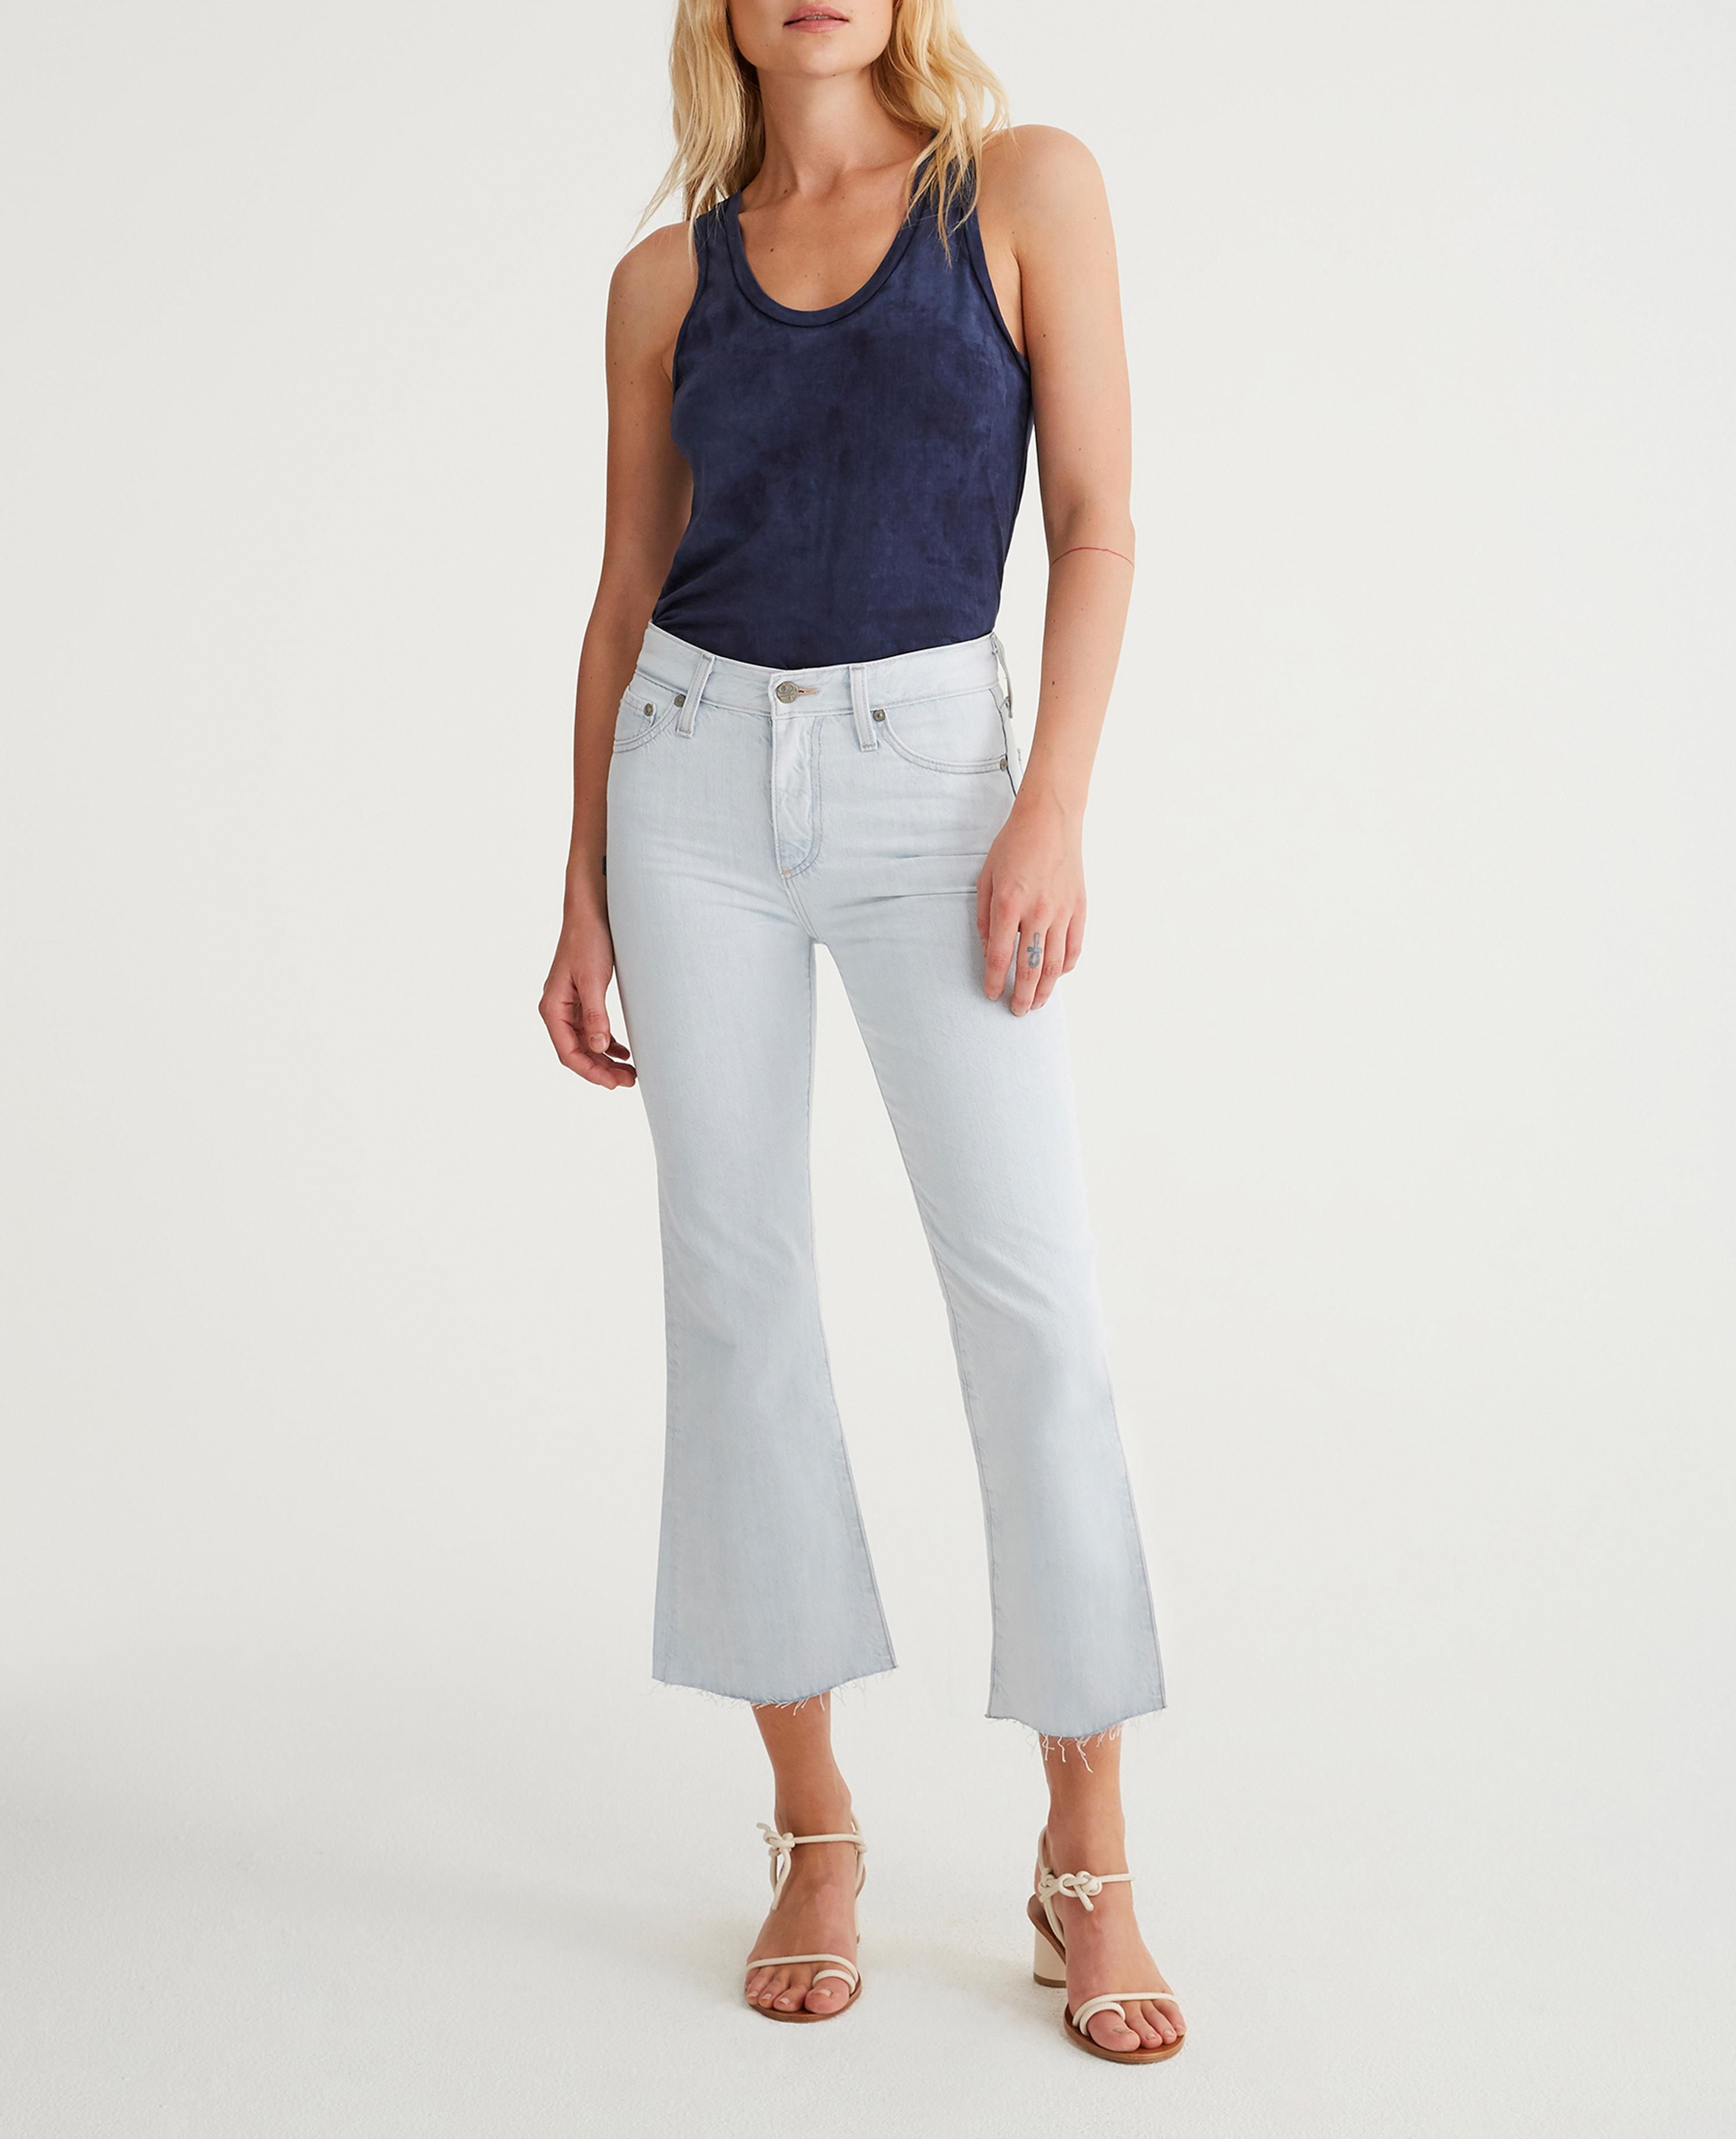 Quinne Crop | AG Jeans Outlet